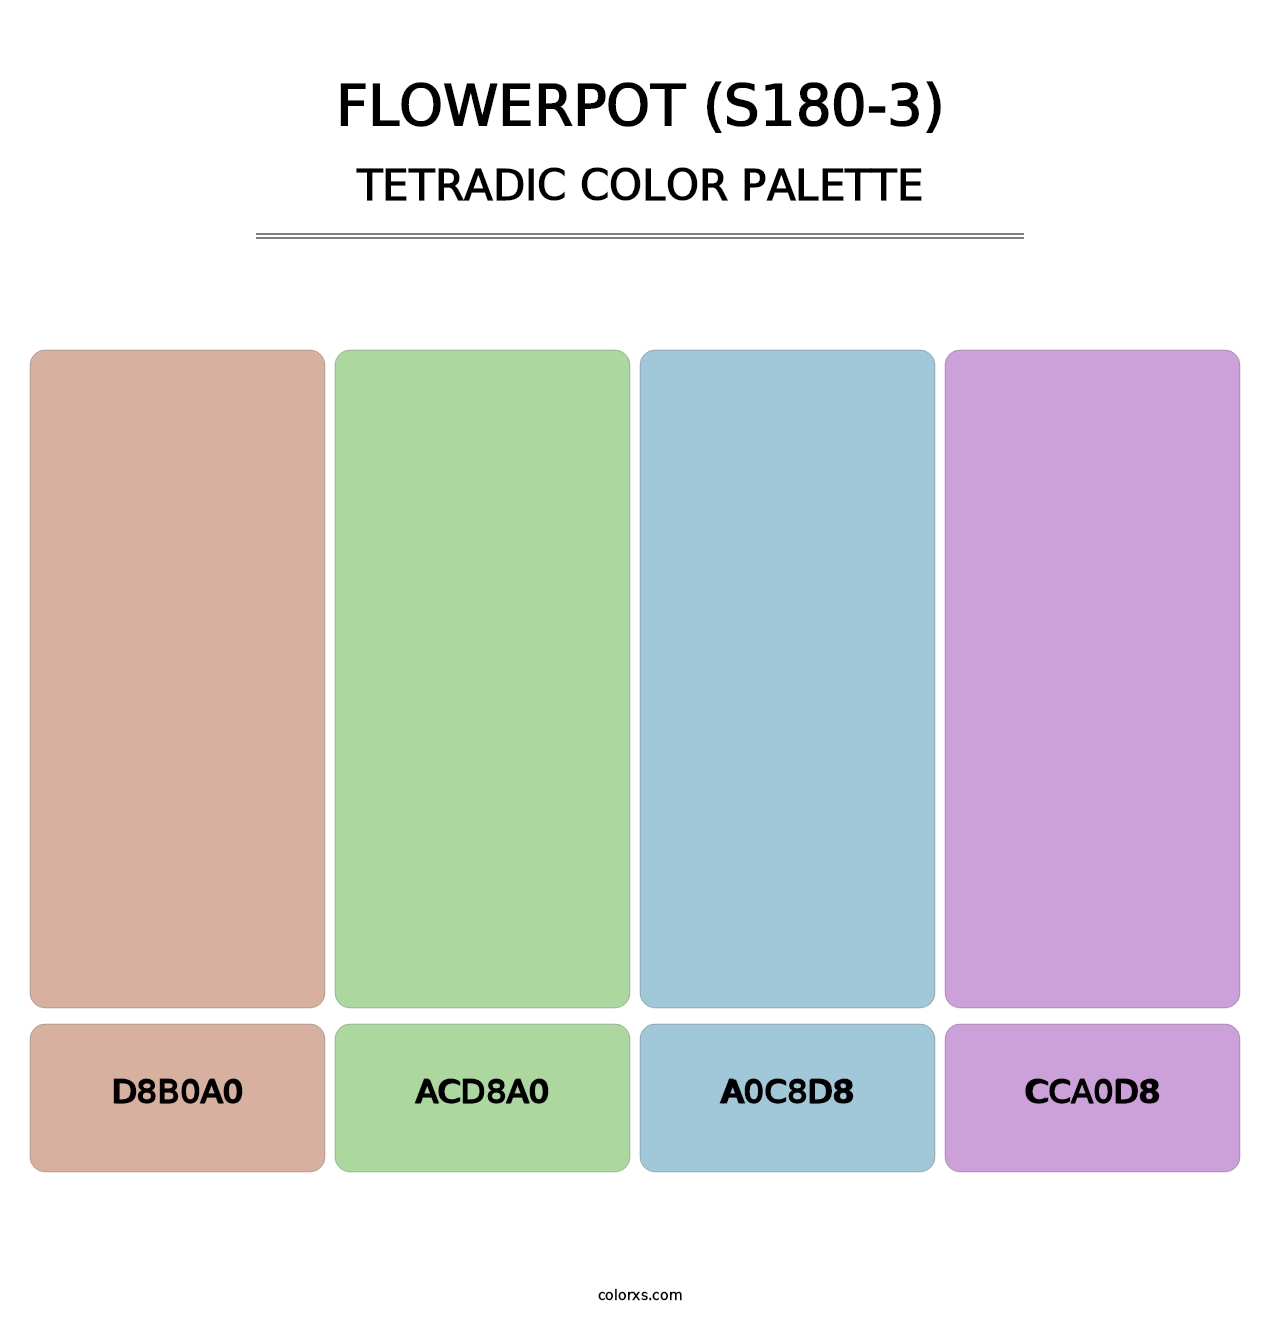 Flowerpot (S180-3) - Tetradic Color Palette